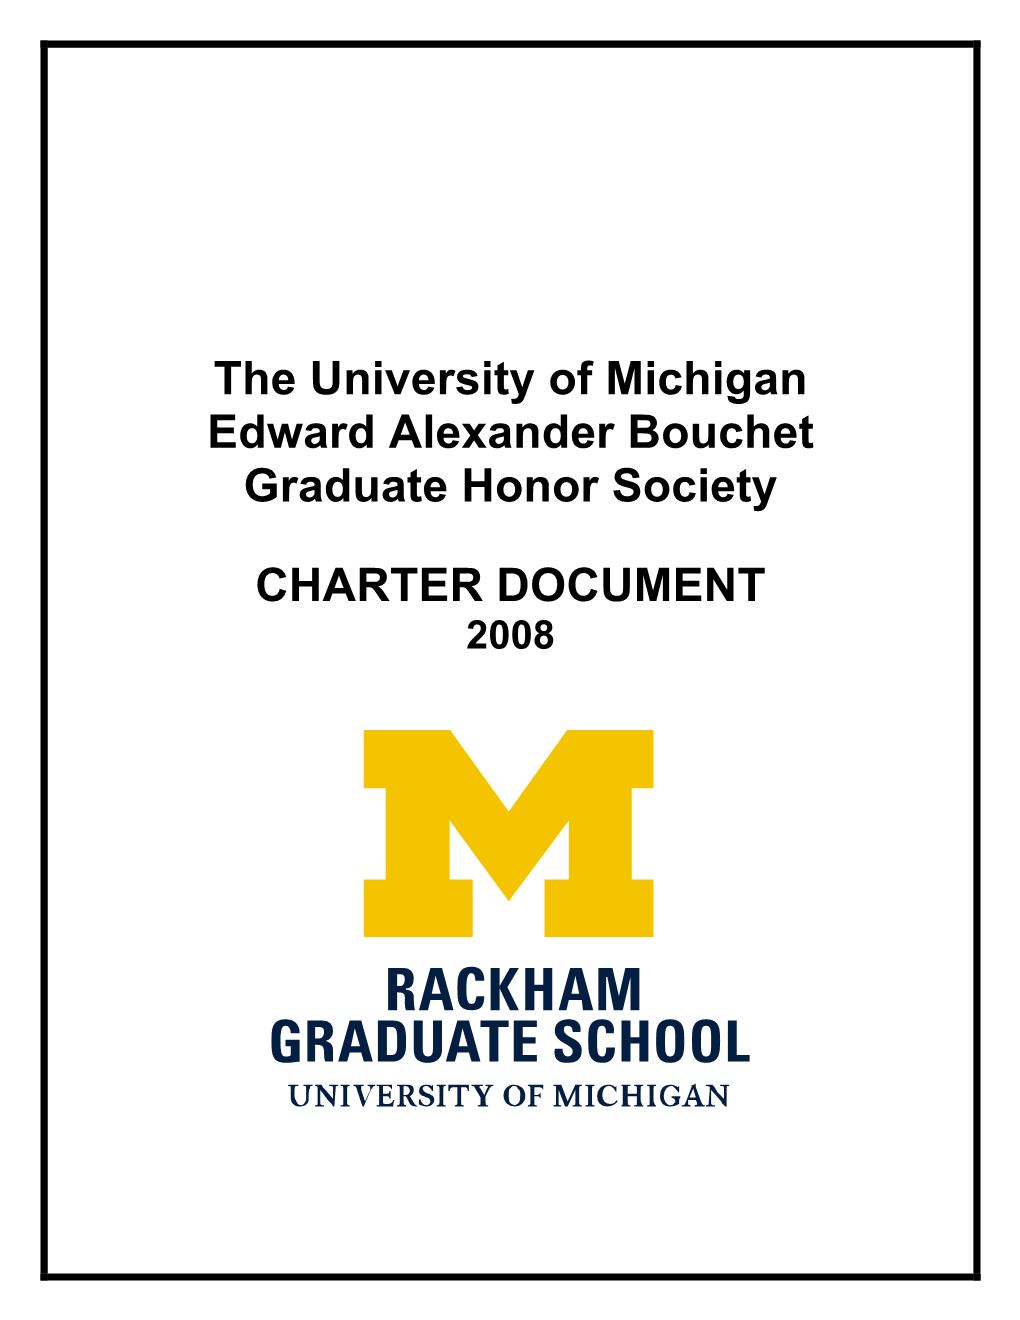 The University of Michigan Edward Alexander Bouchet Graduate Honor Society CHARTER DOCUMENT